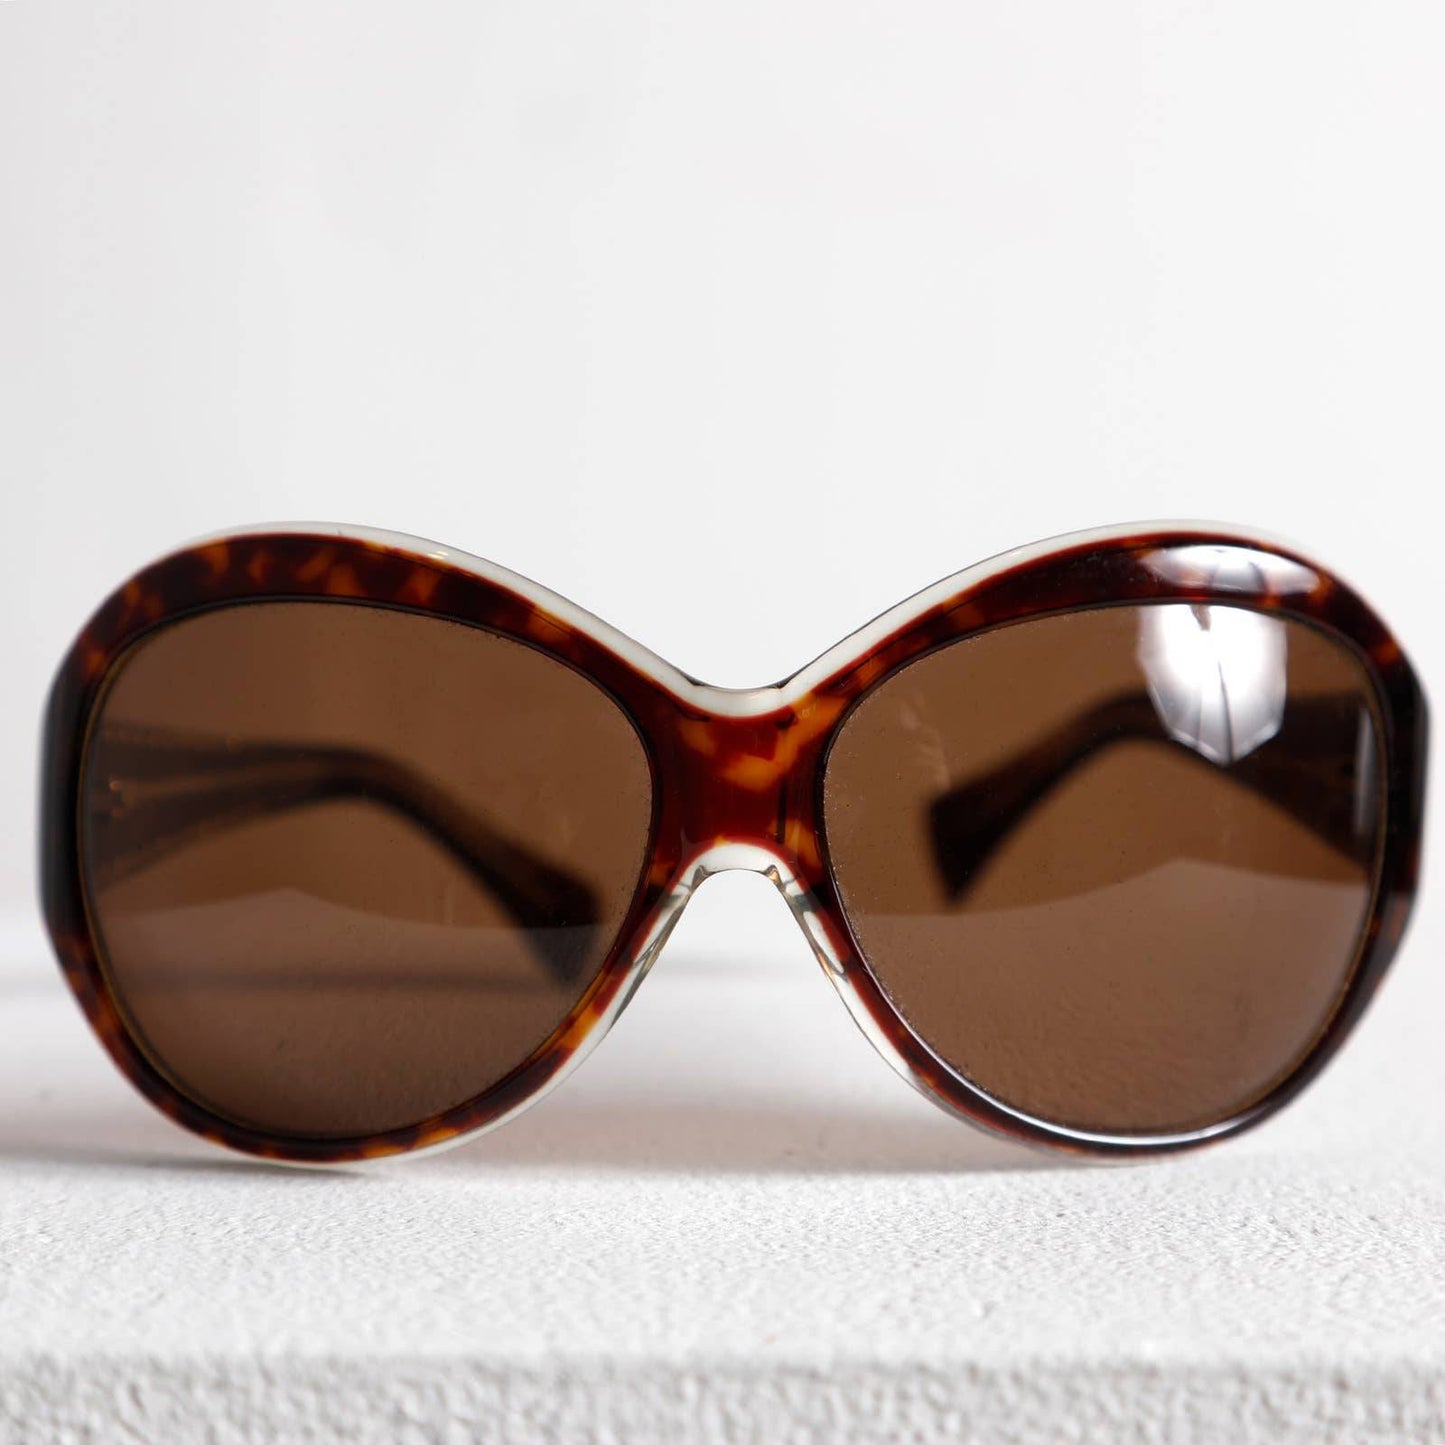 CALVIN KLEIN Tortoise Round Sunglasses